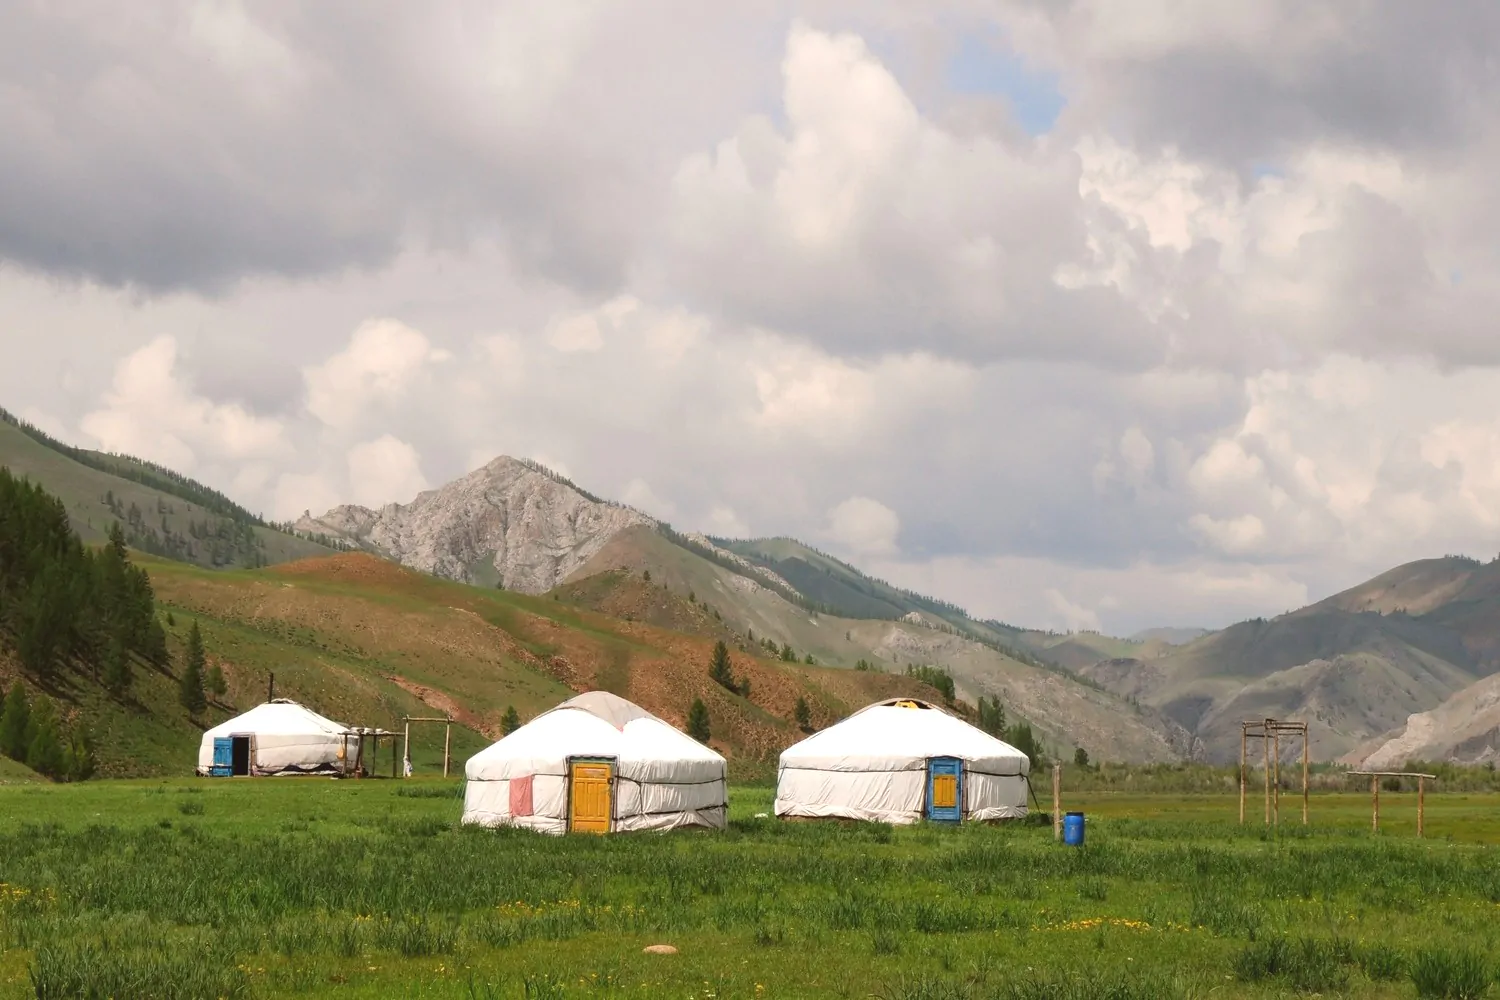 Nomadic family in Central Mongolia